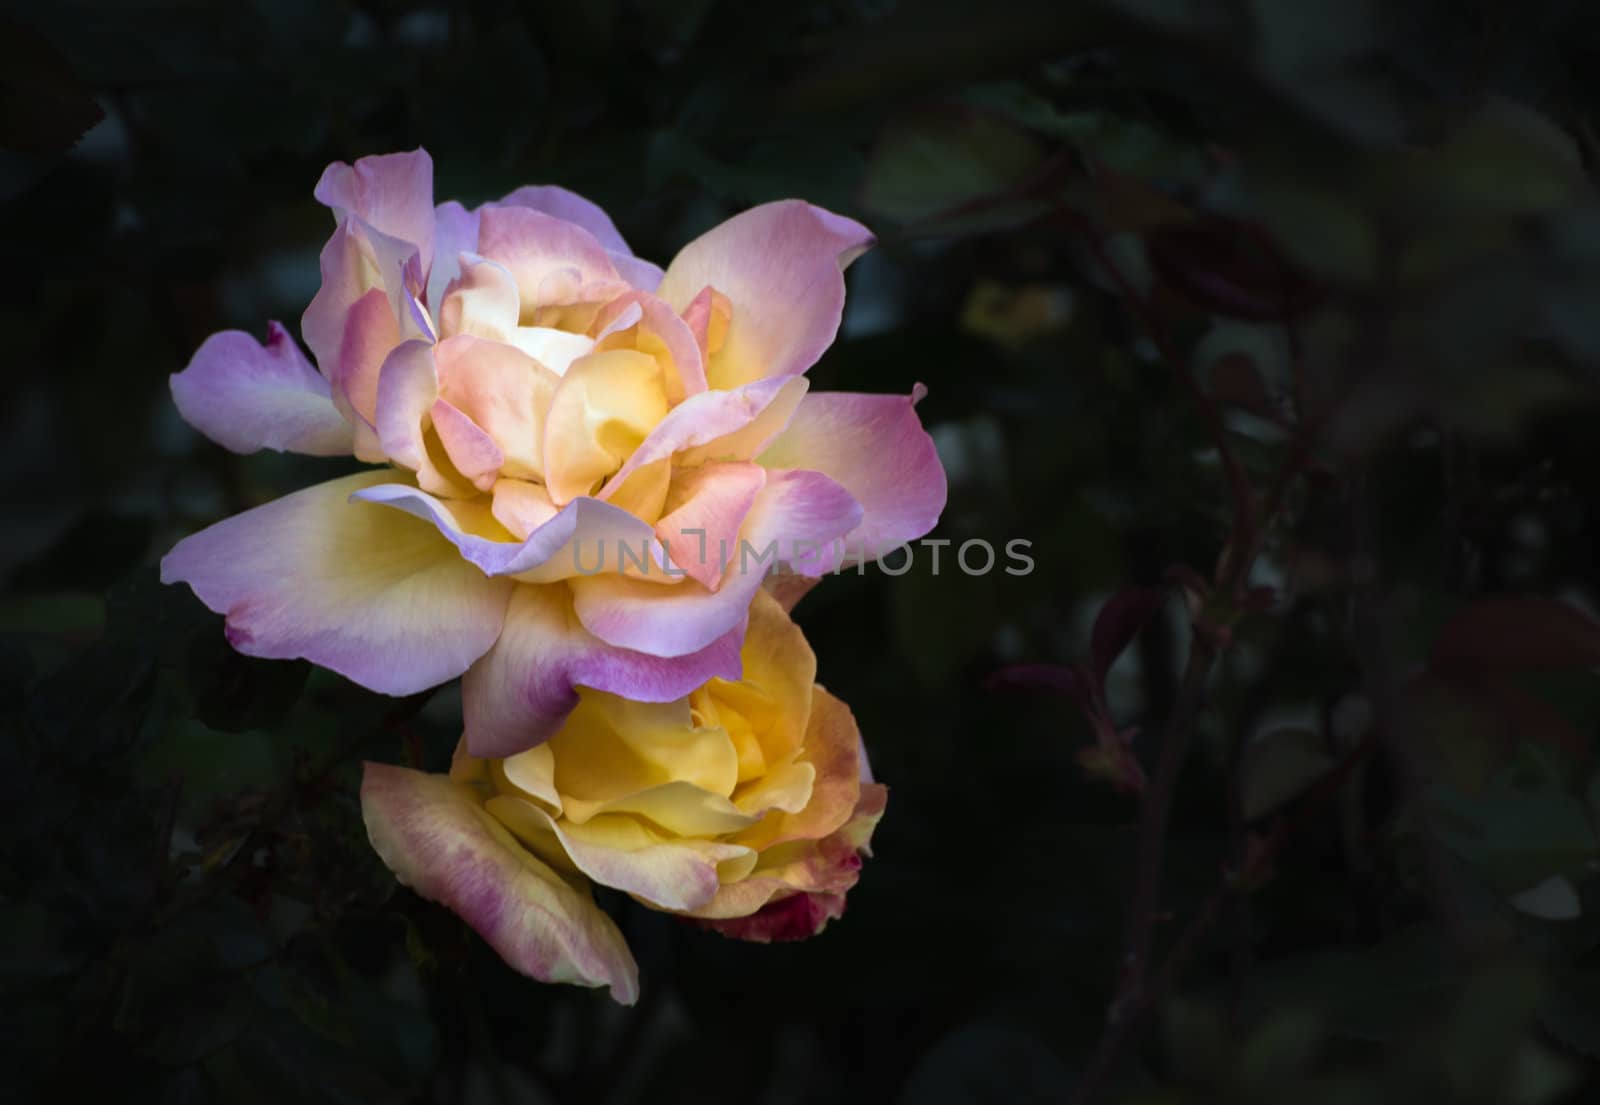 ose Bloom in Evening Light Rose Bloom in Evening Light